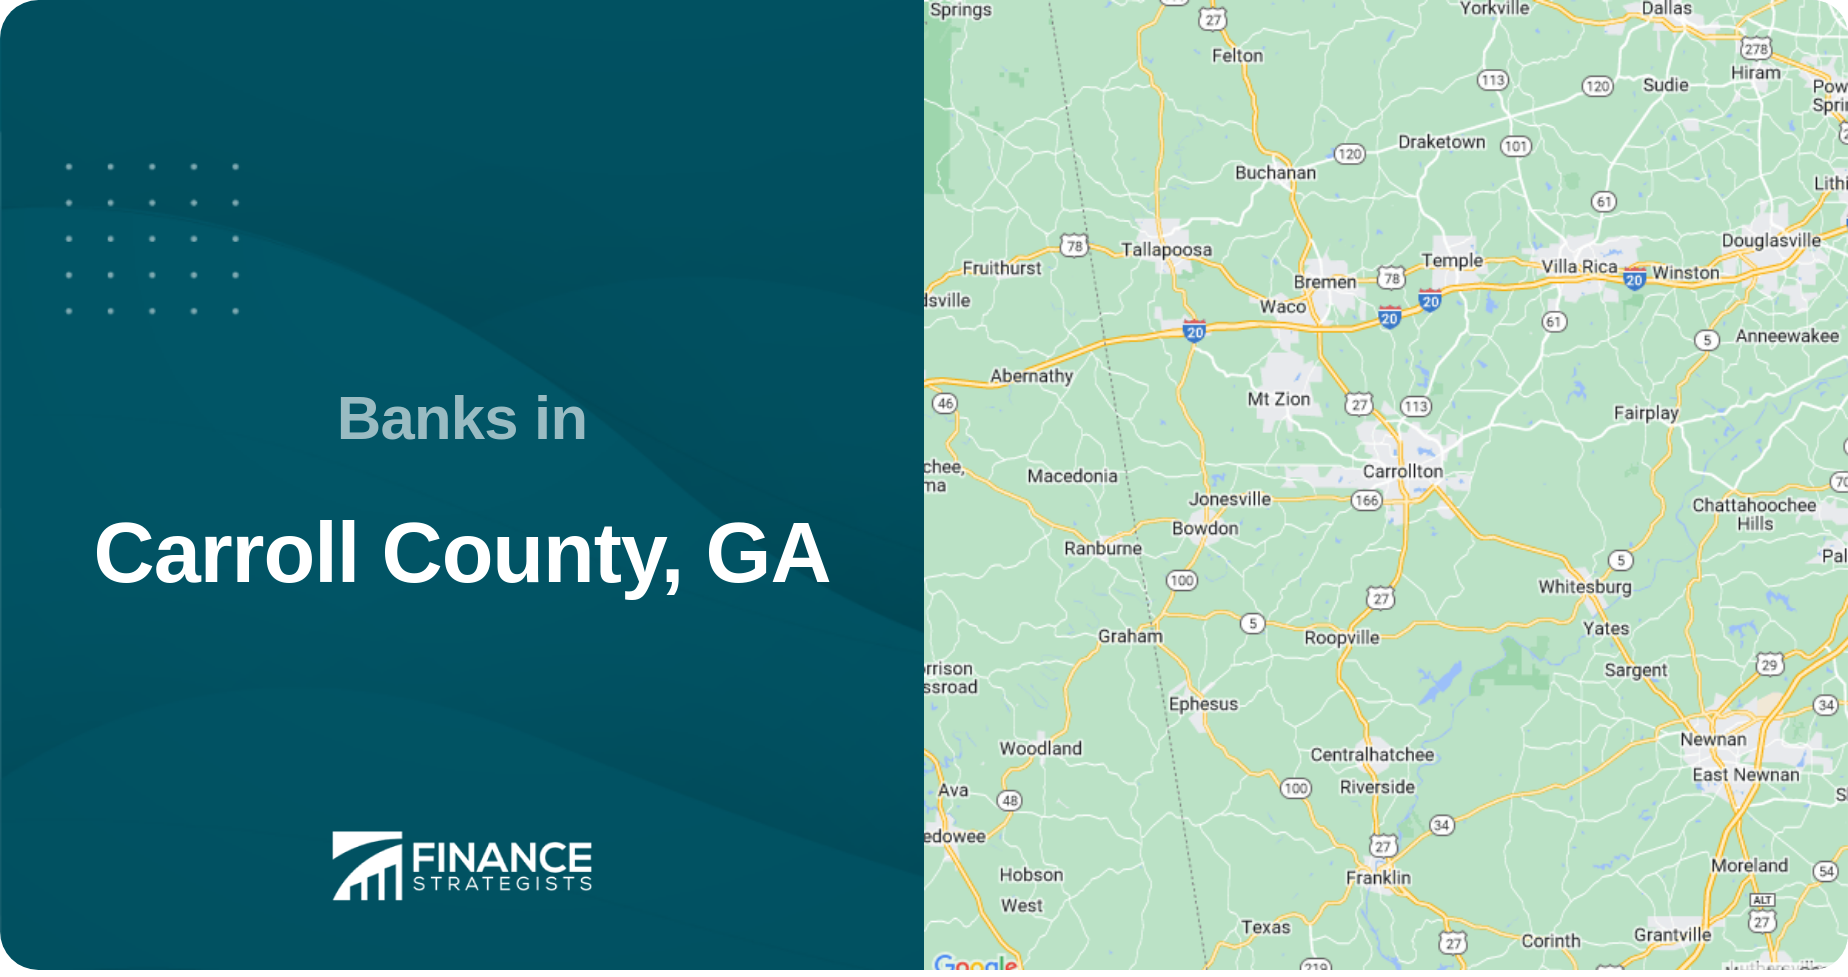 Banks in Carroll County, GA